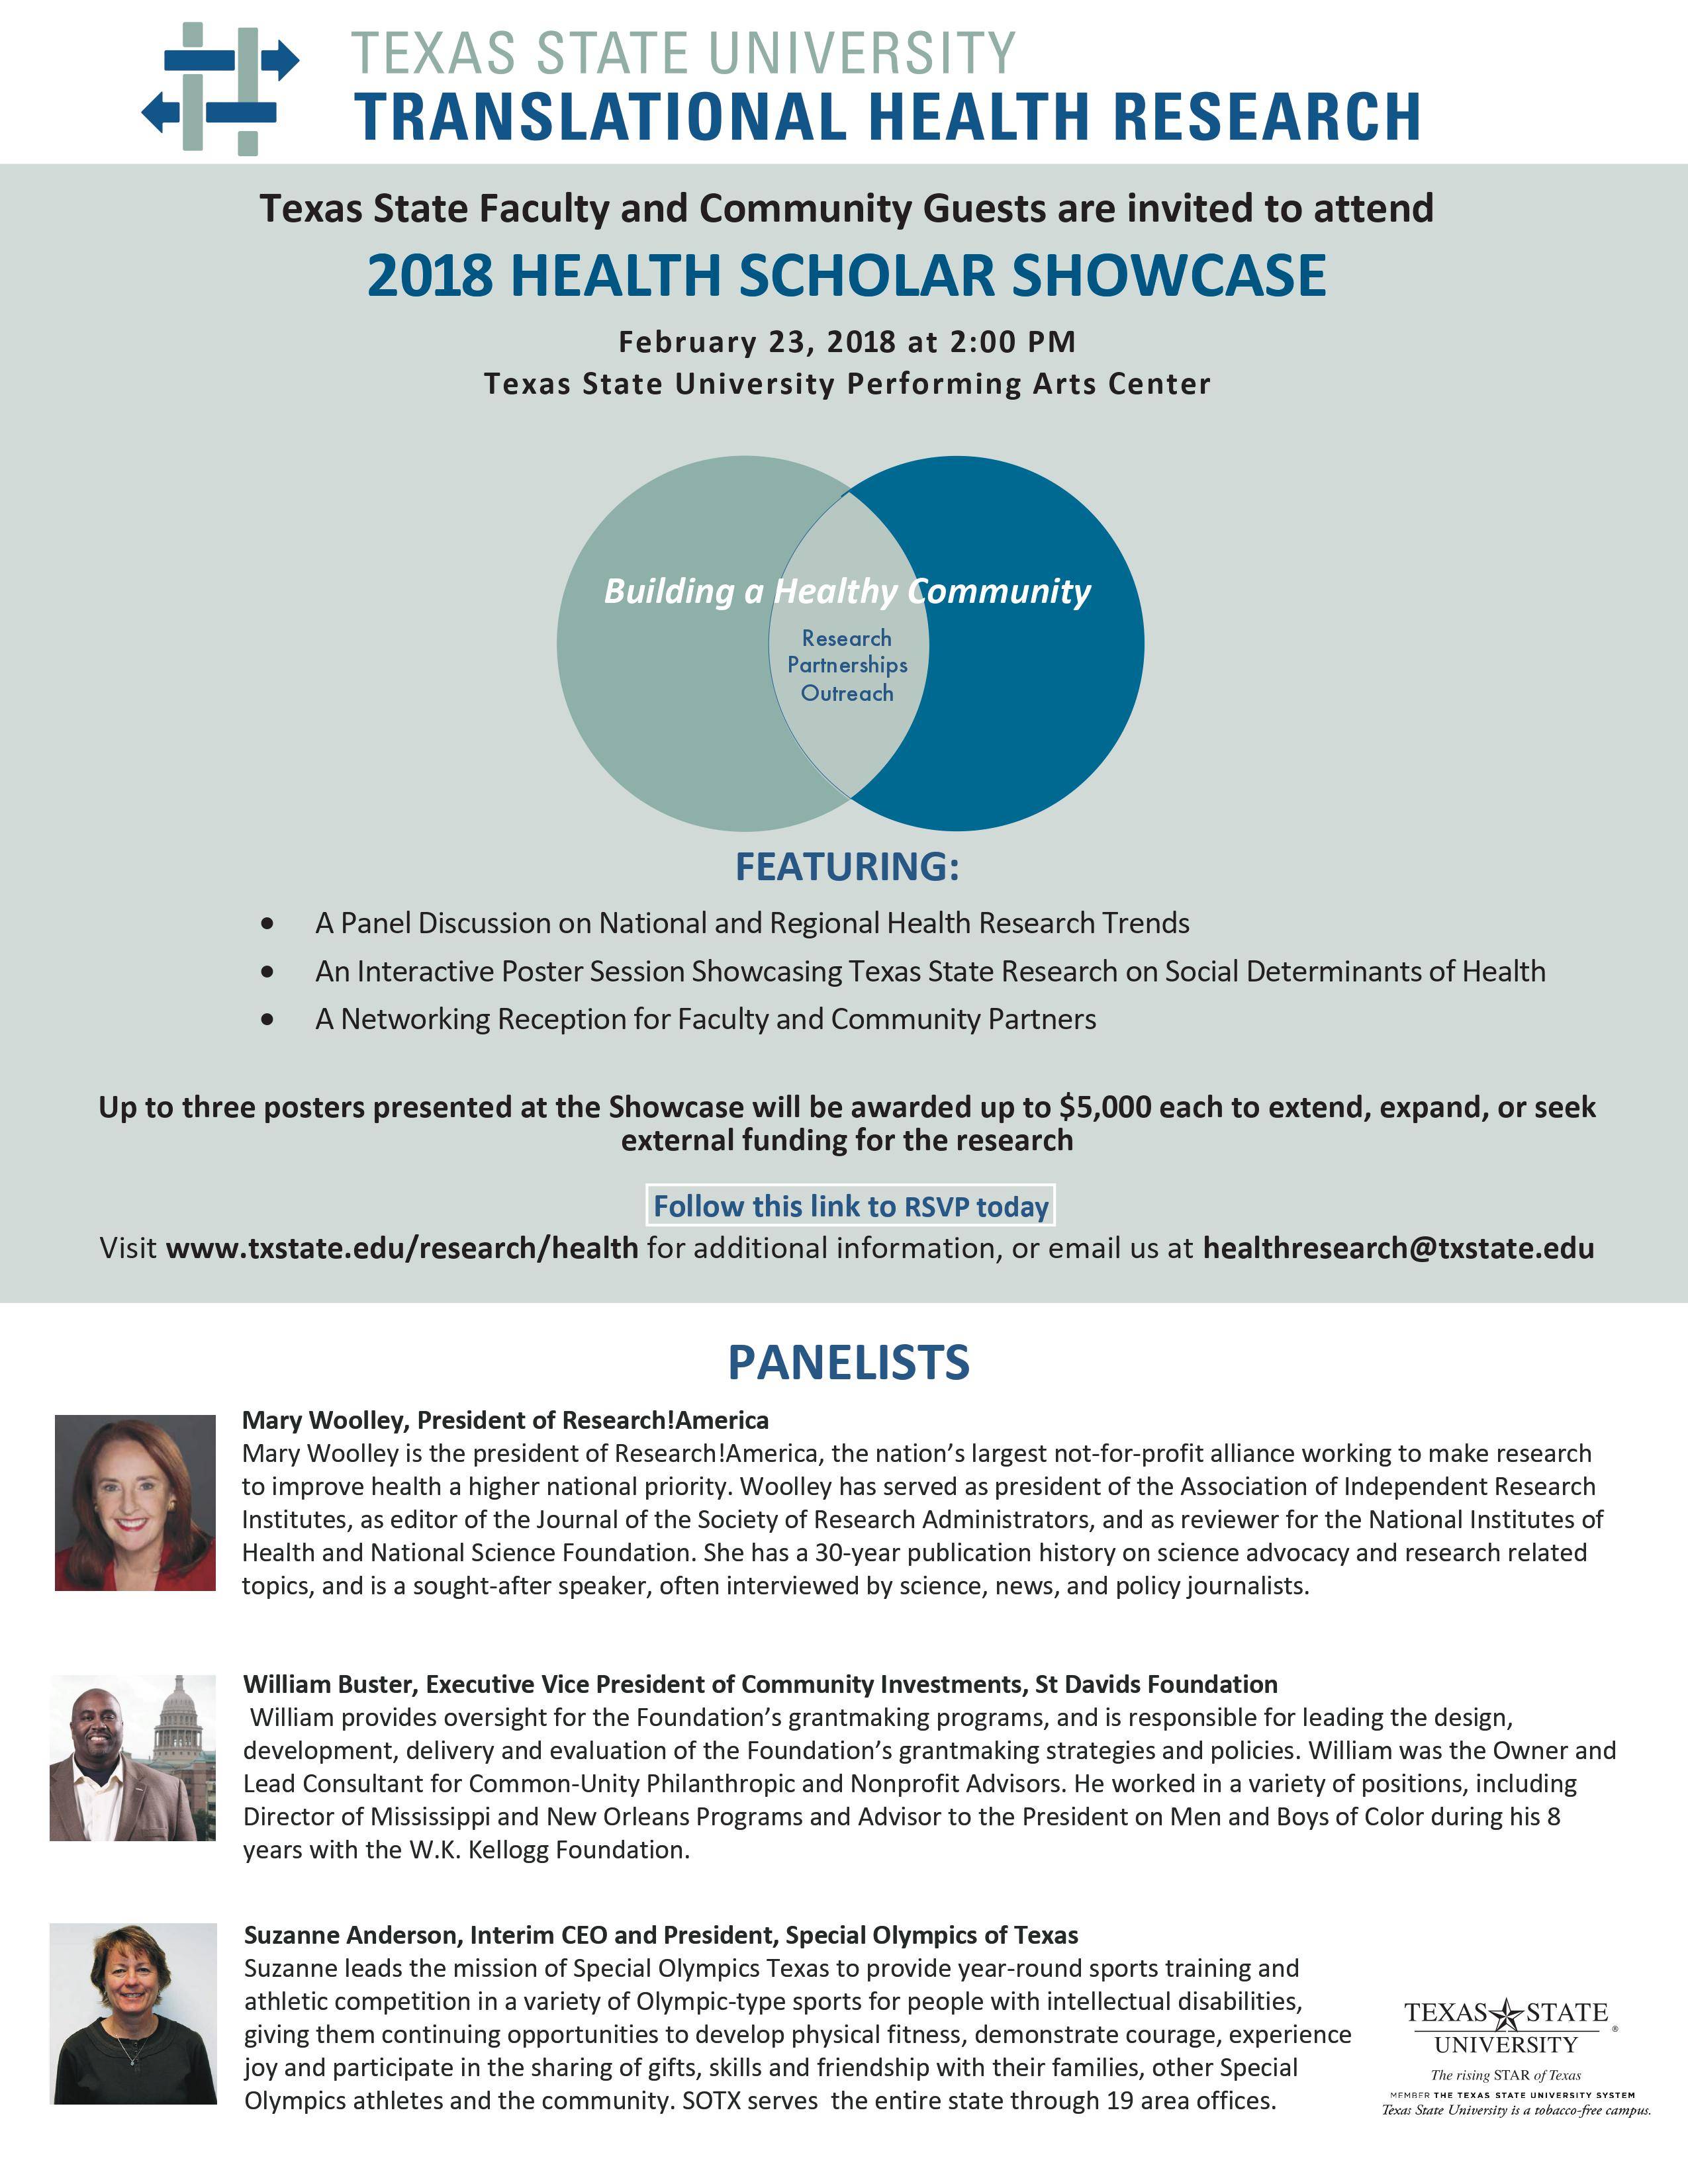 Health Scholar Showcase Flyer